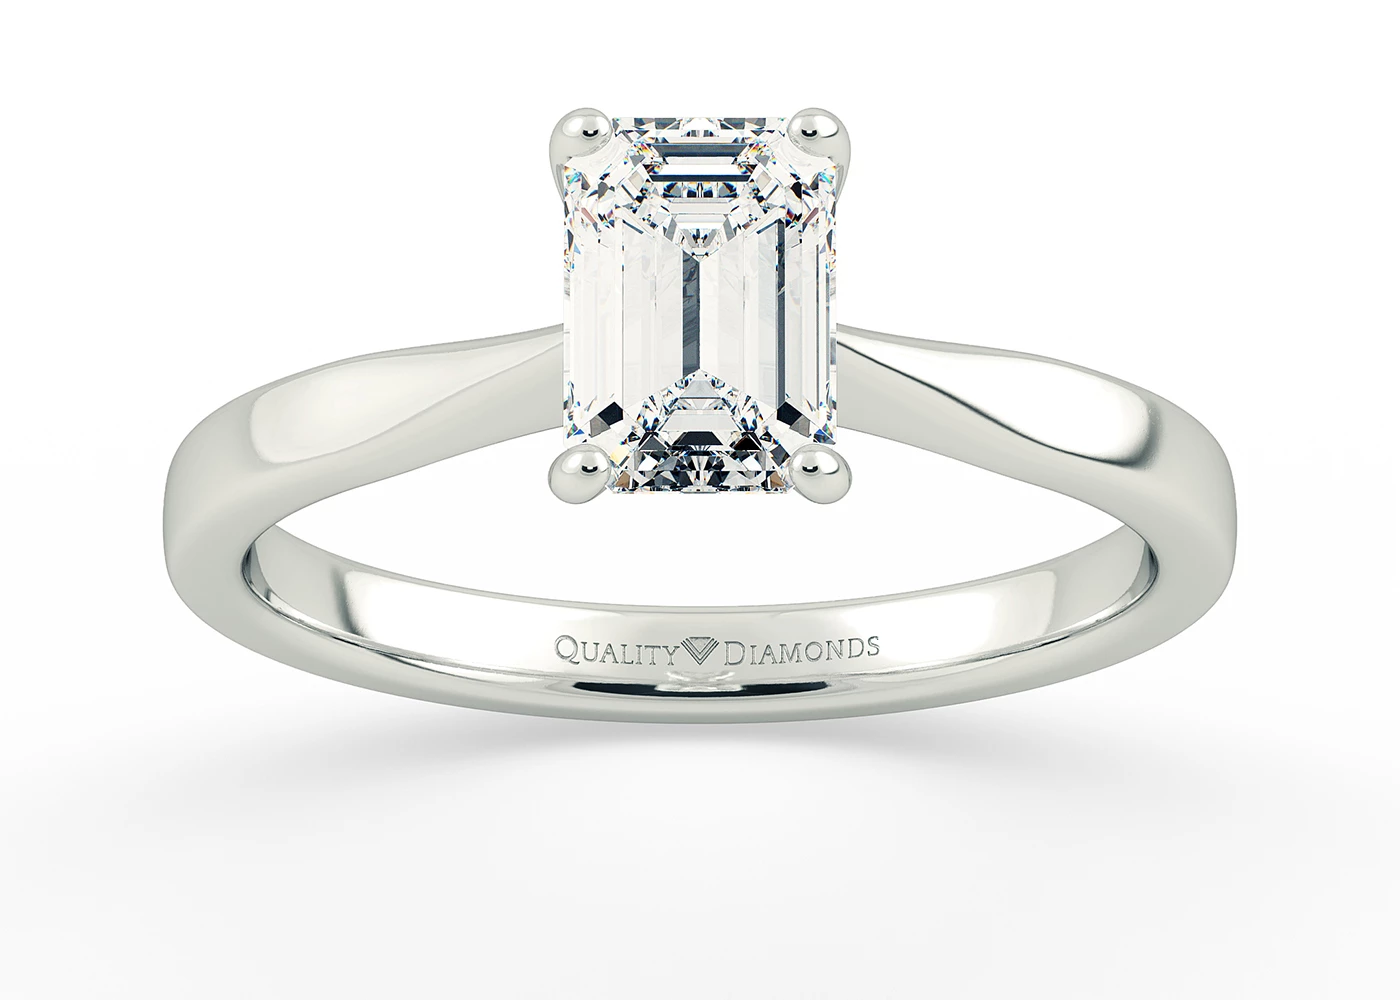 Emerald Beau Diamond Ring in Palladium